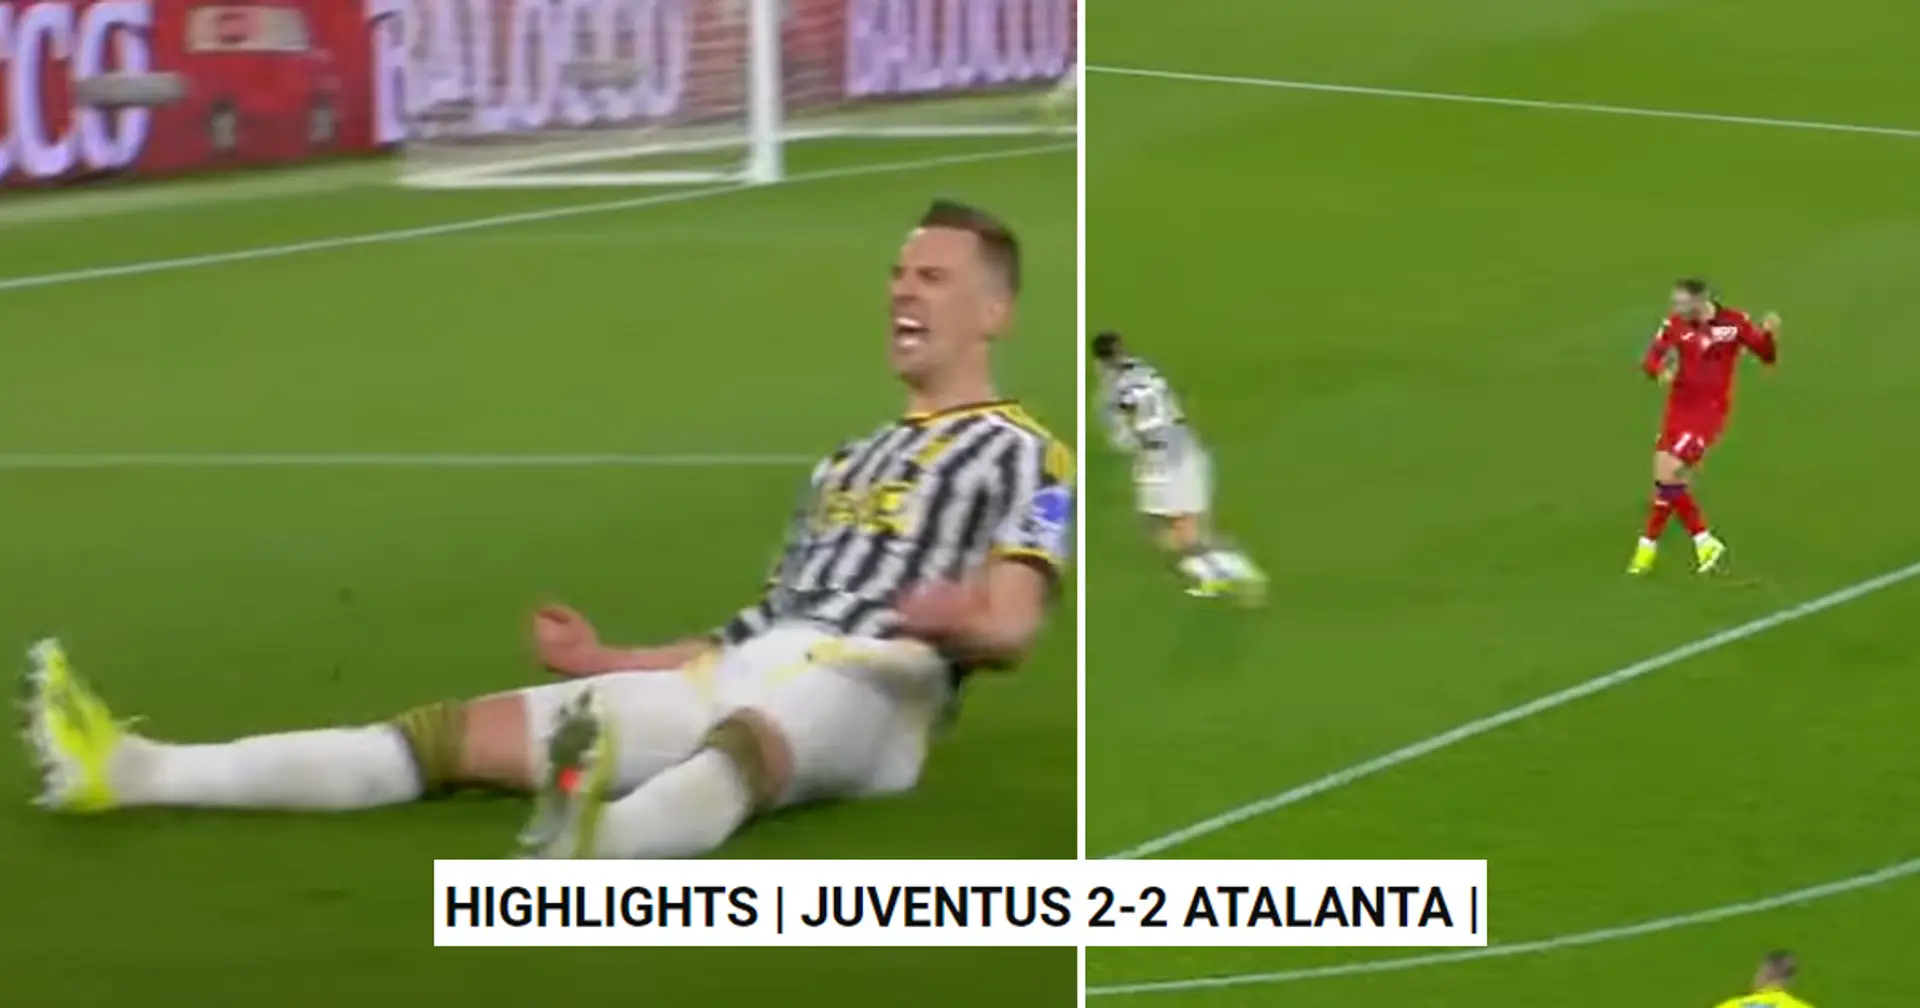 HIGHLIGHTS | Juventus-Atalanta, 2-2: beffa nel finale per i Bianconeri di Max Allegri